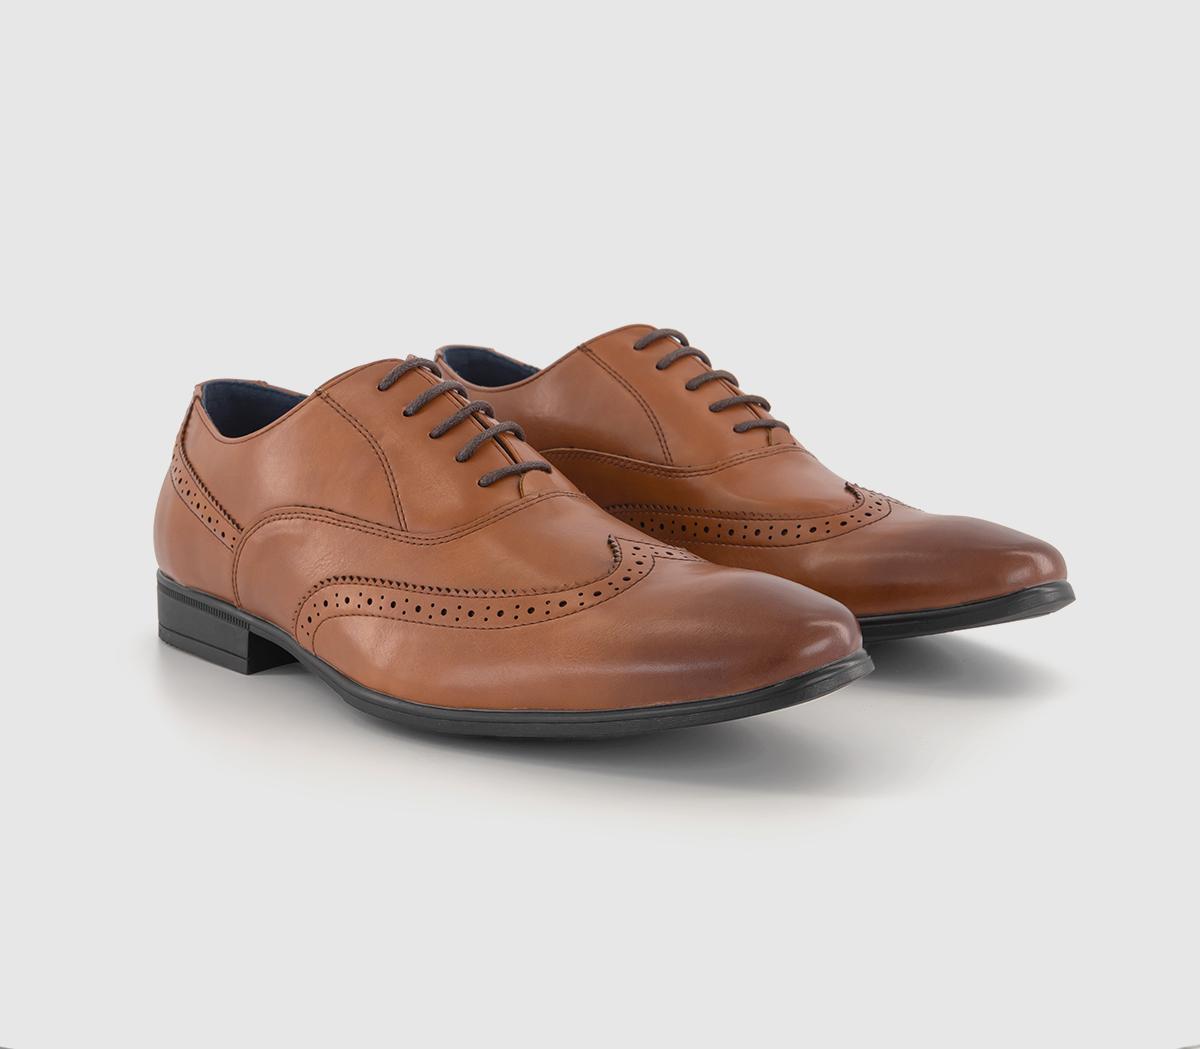 OFFICE Mens Martel Wingtip Oxford Shoes Tan, 8